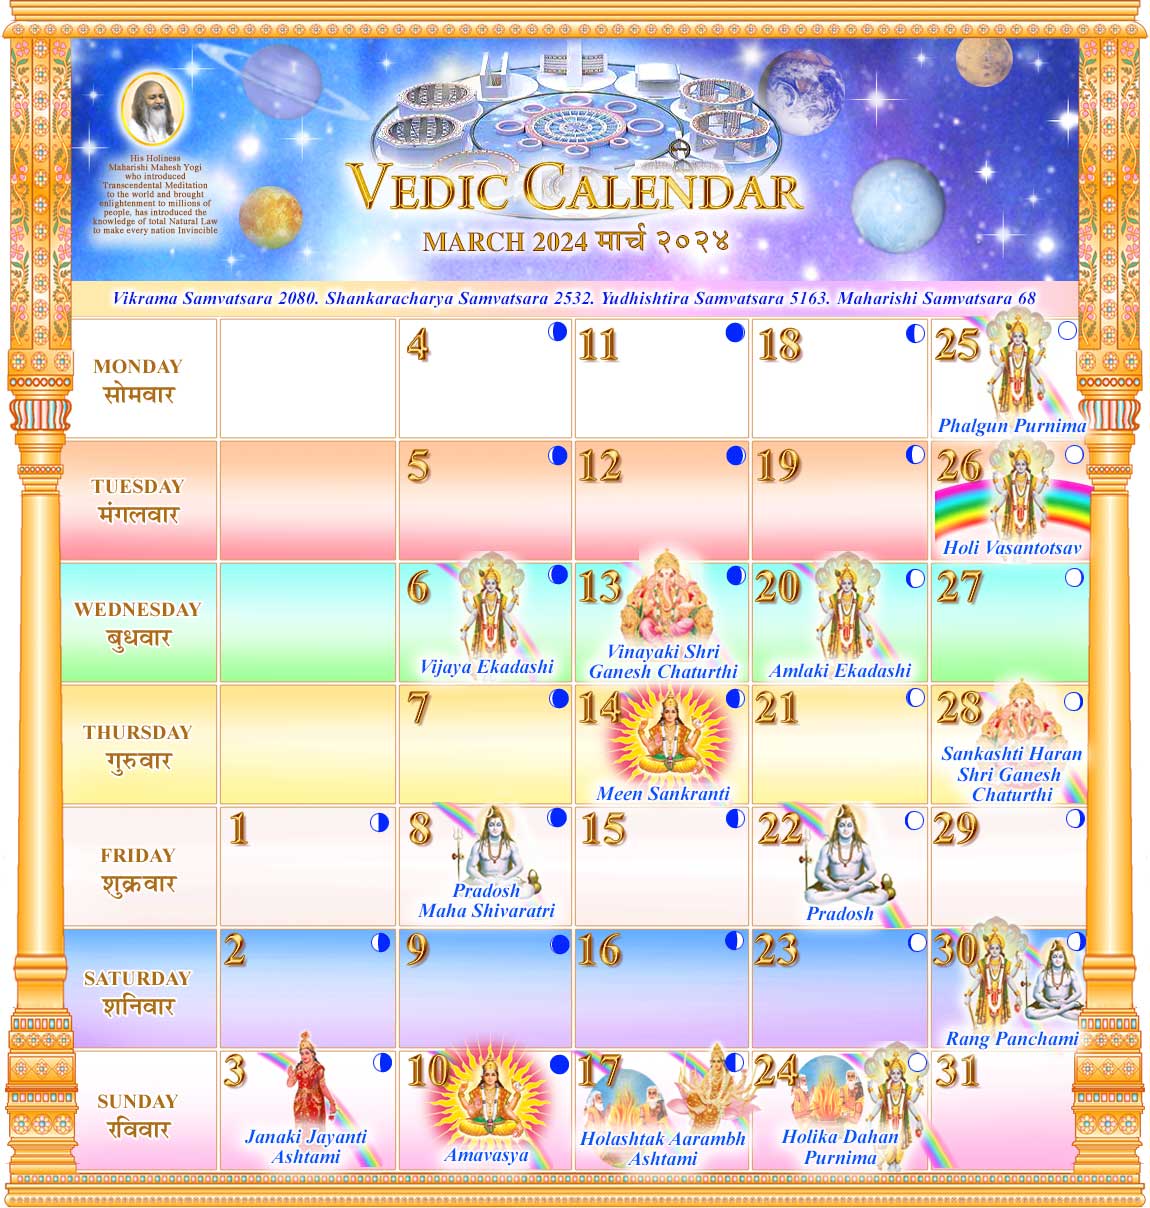 Vedic Calendar for March 2020